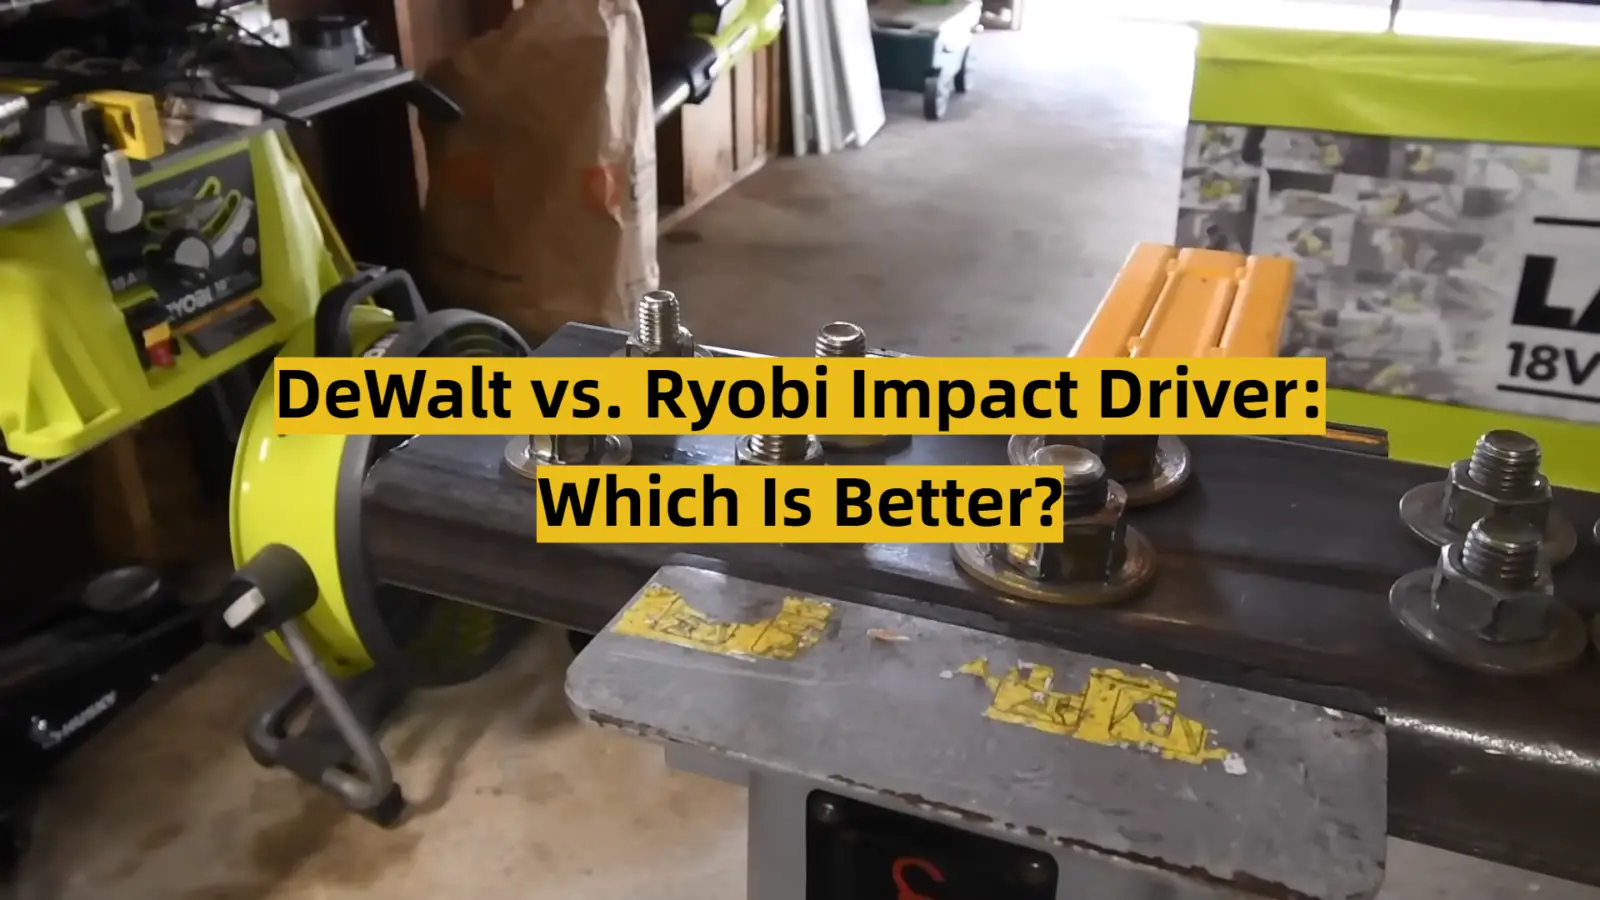 DeWalt vs. Ryobi Impact Driver: Which Is Better?